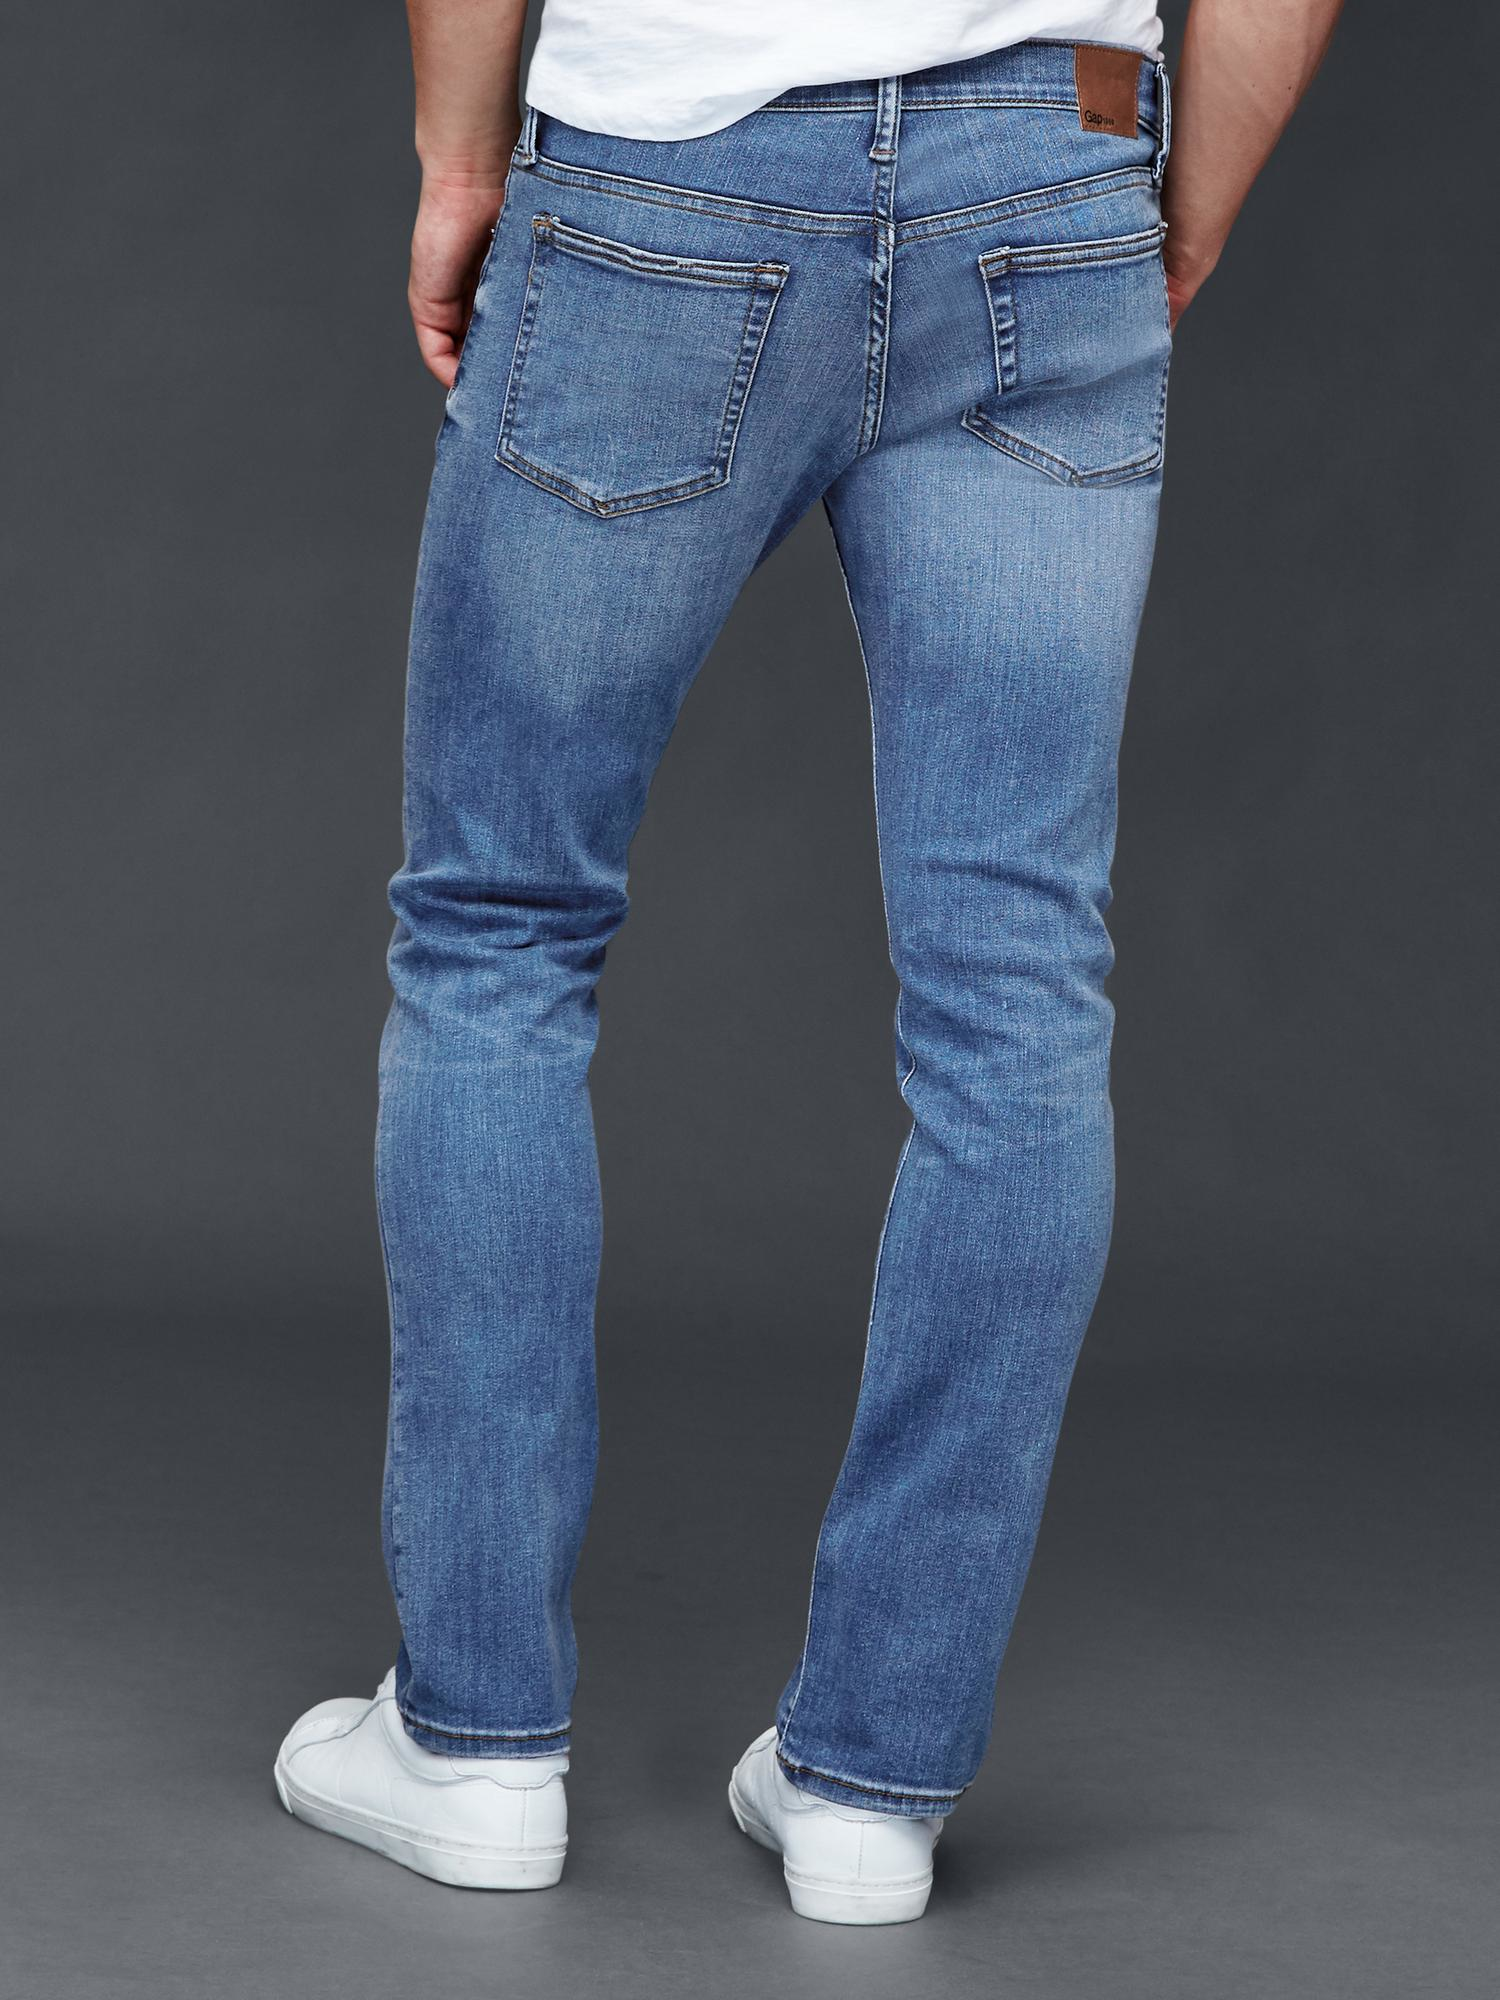 Lyst - Gap Slim Fit Jeans in Blue for Men